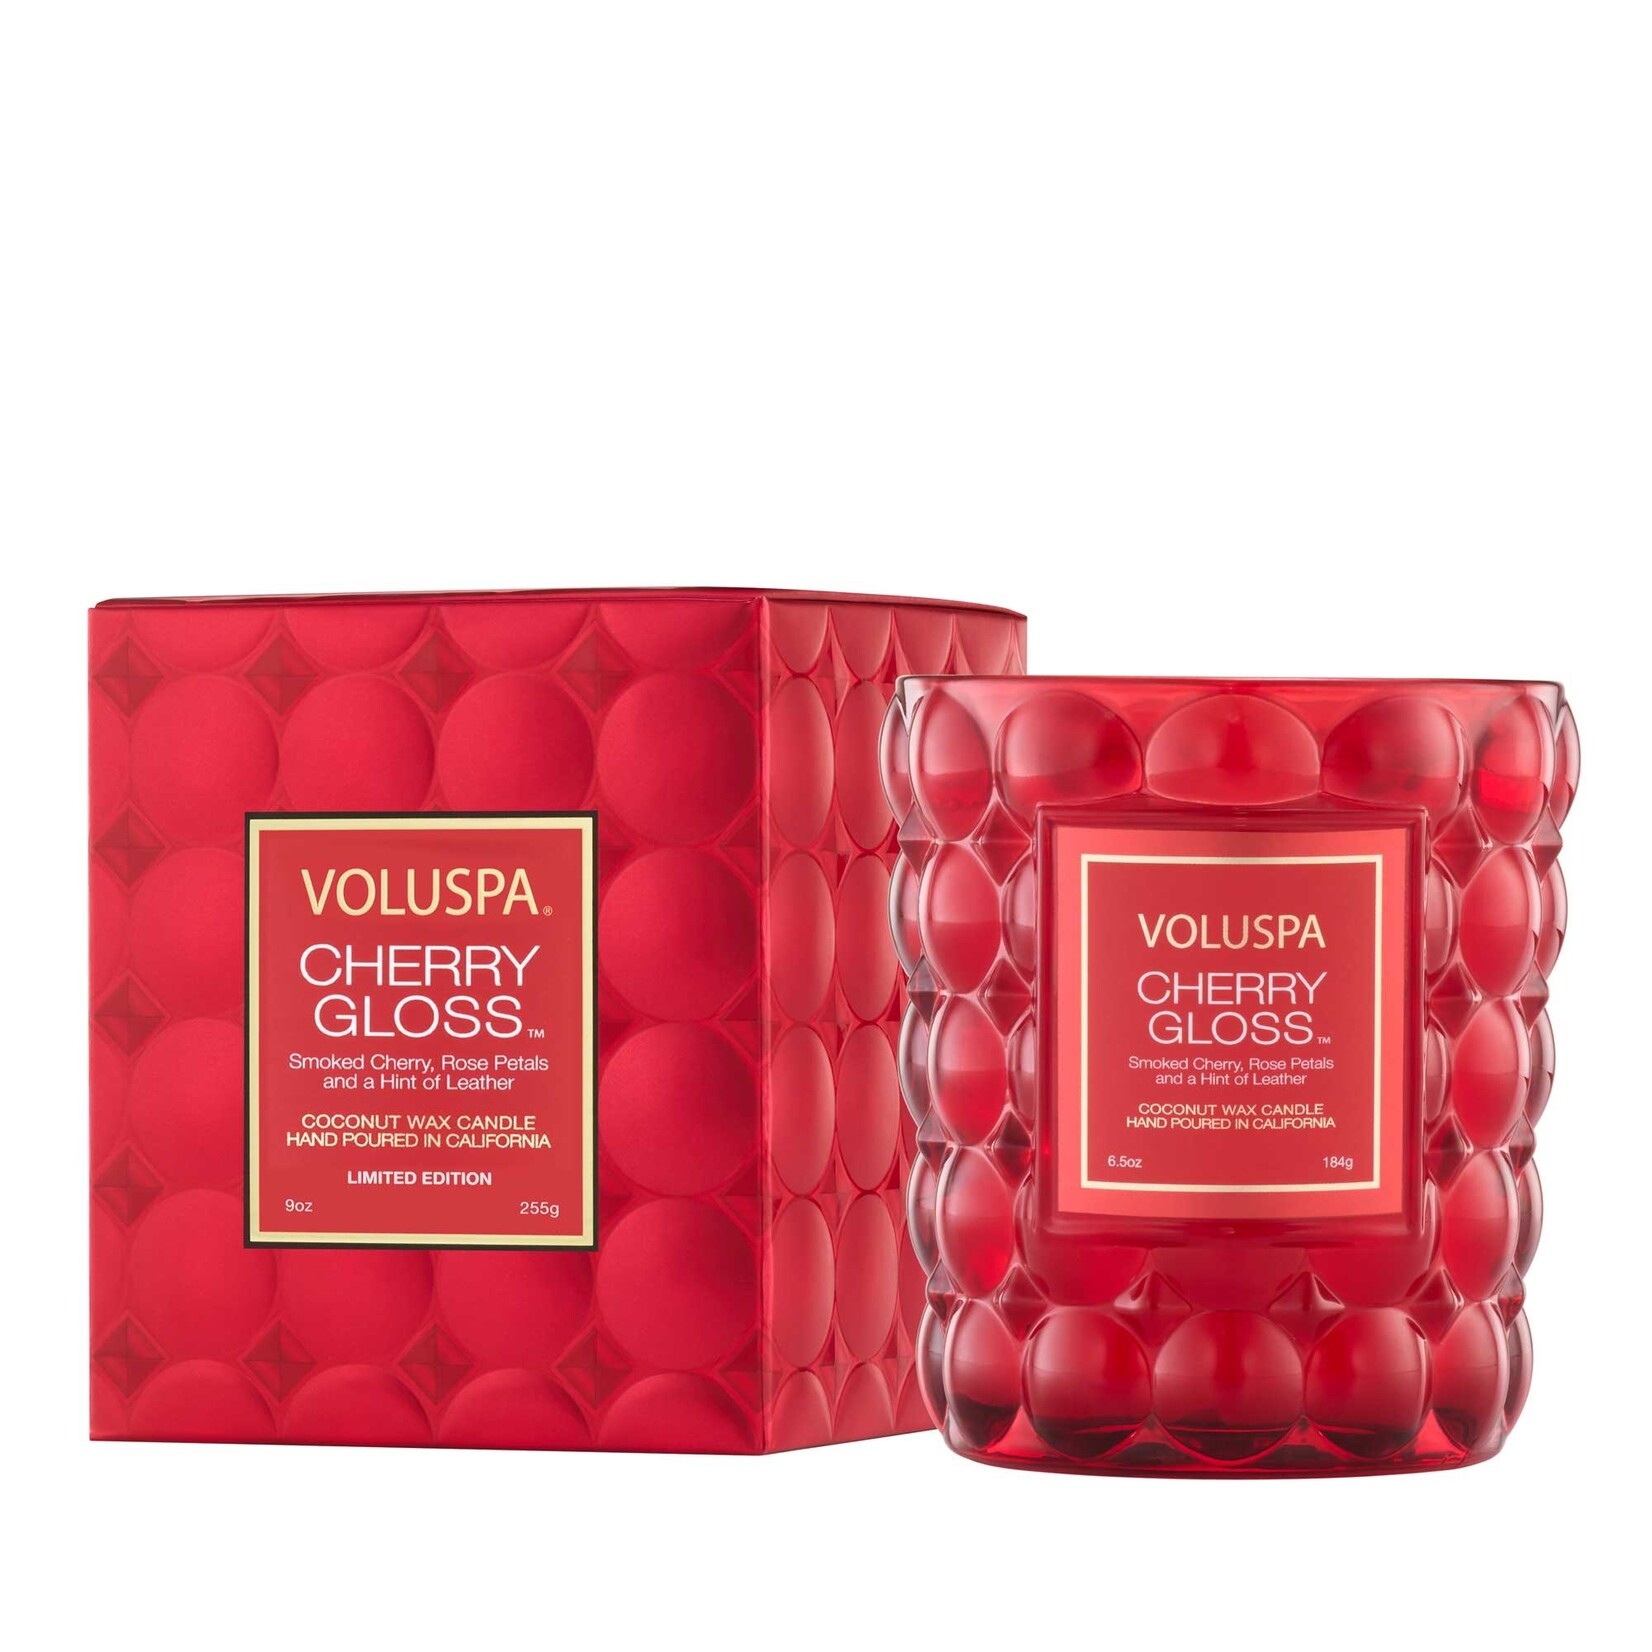 Voluspa Cherry Gloss 6.5oz Candle